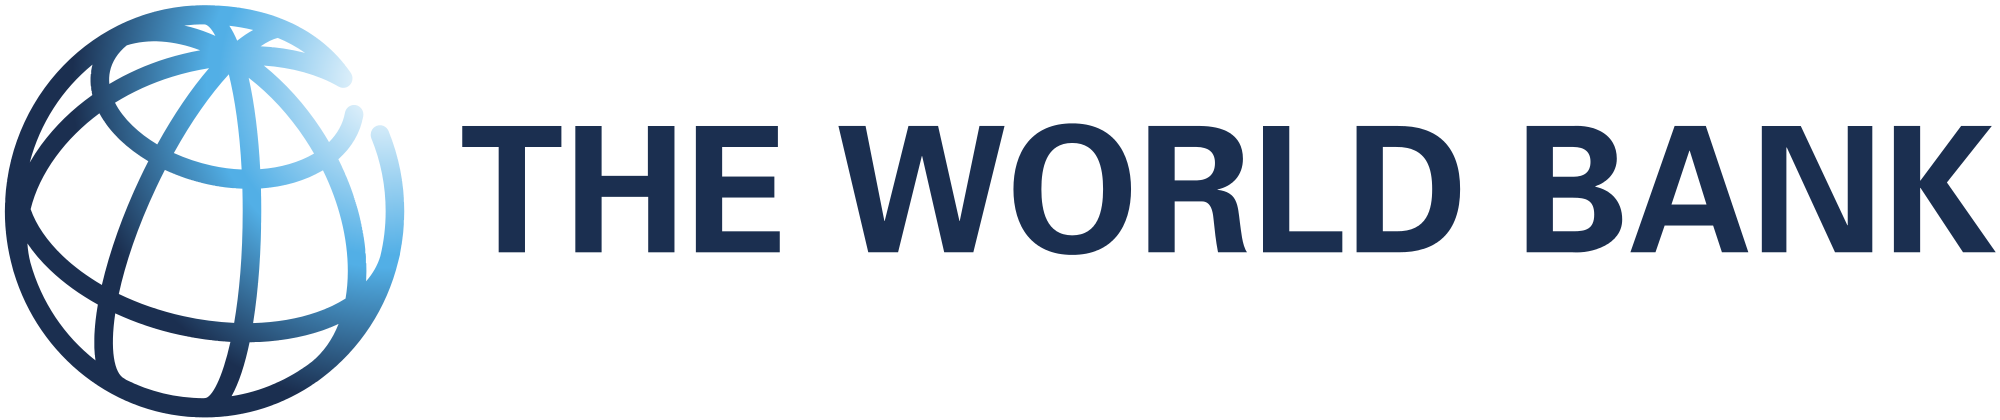 The_World_Bank_logo.svg